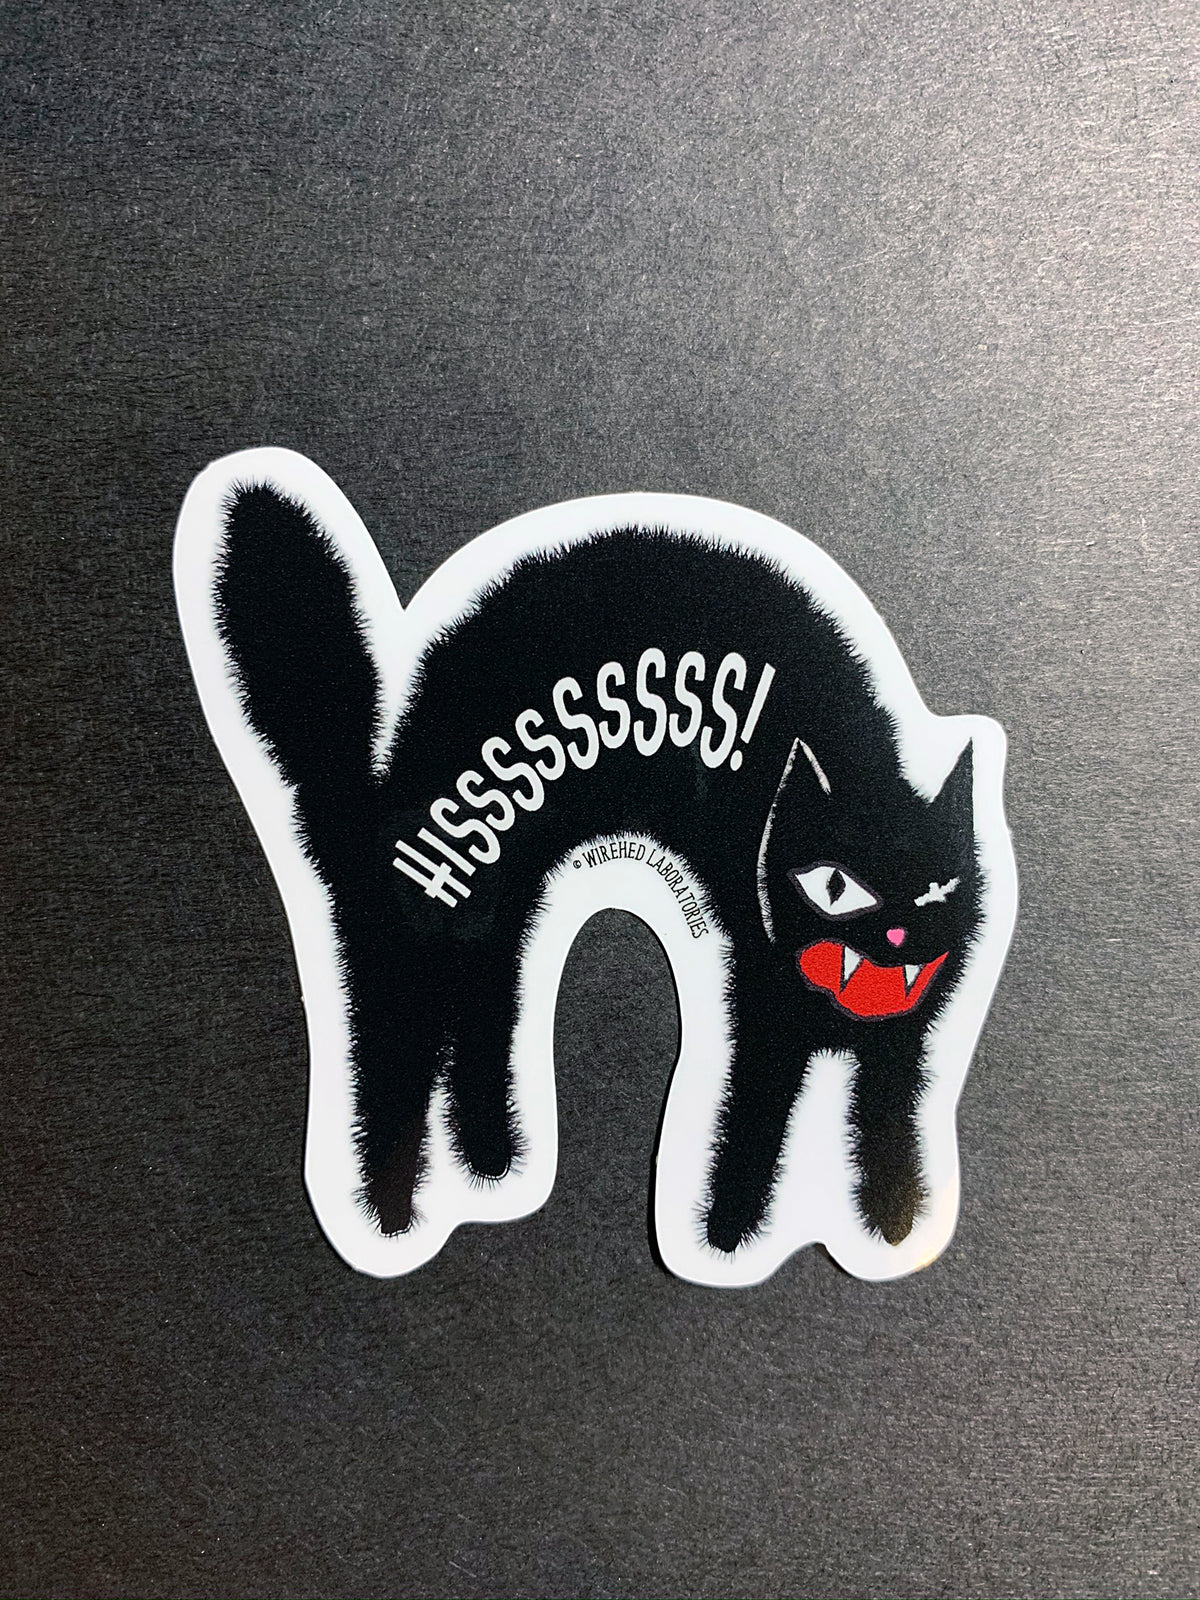 Hissing Black Cat Sticker!